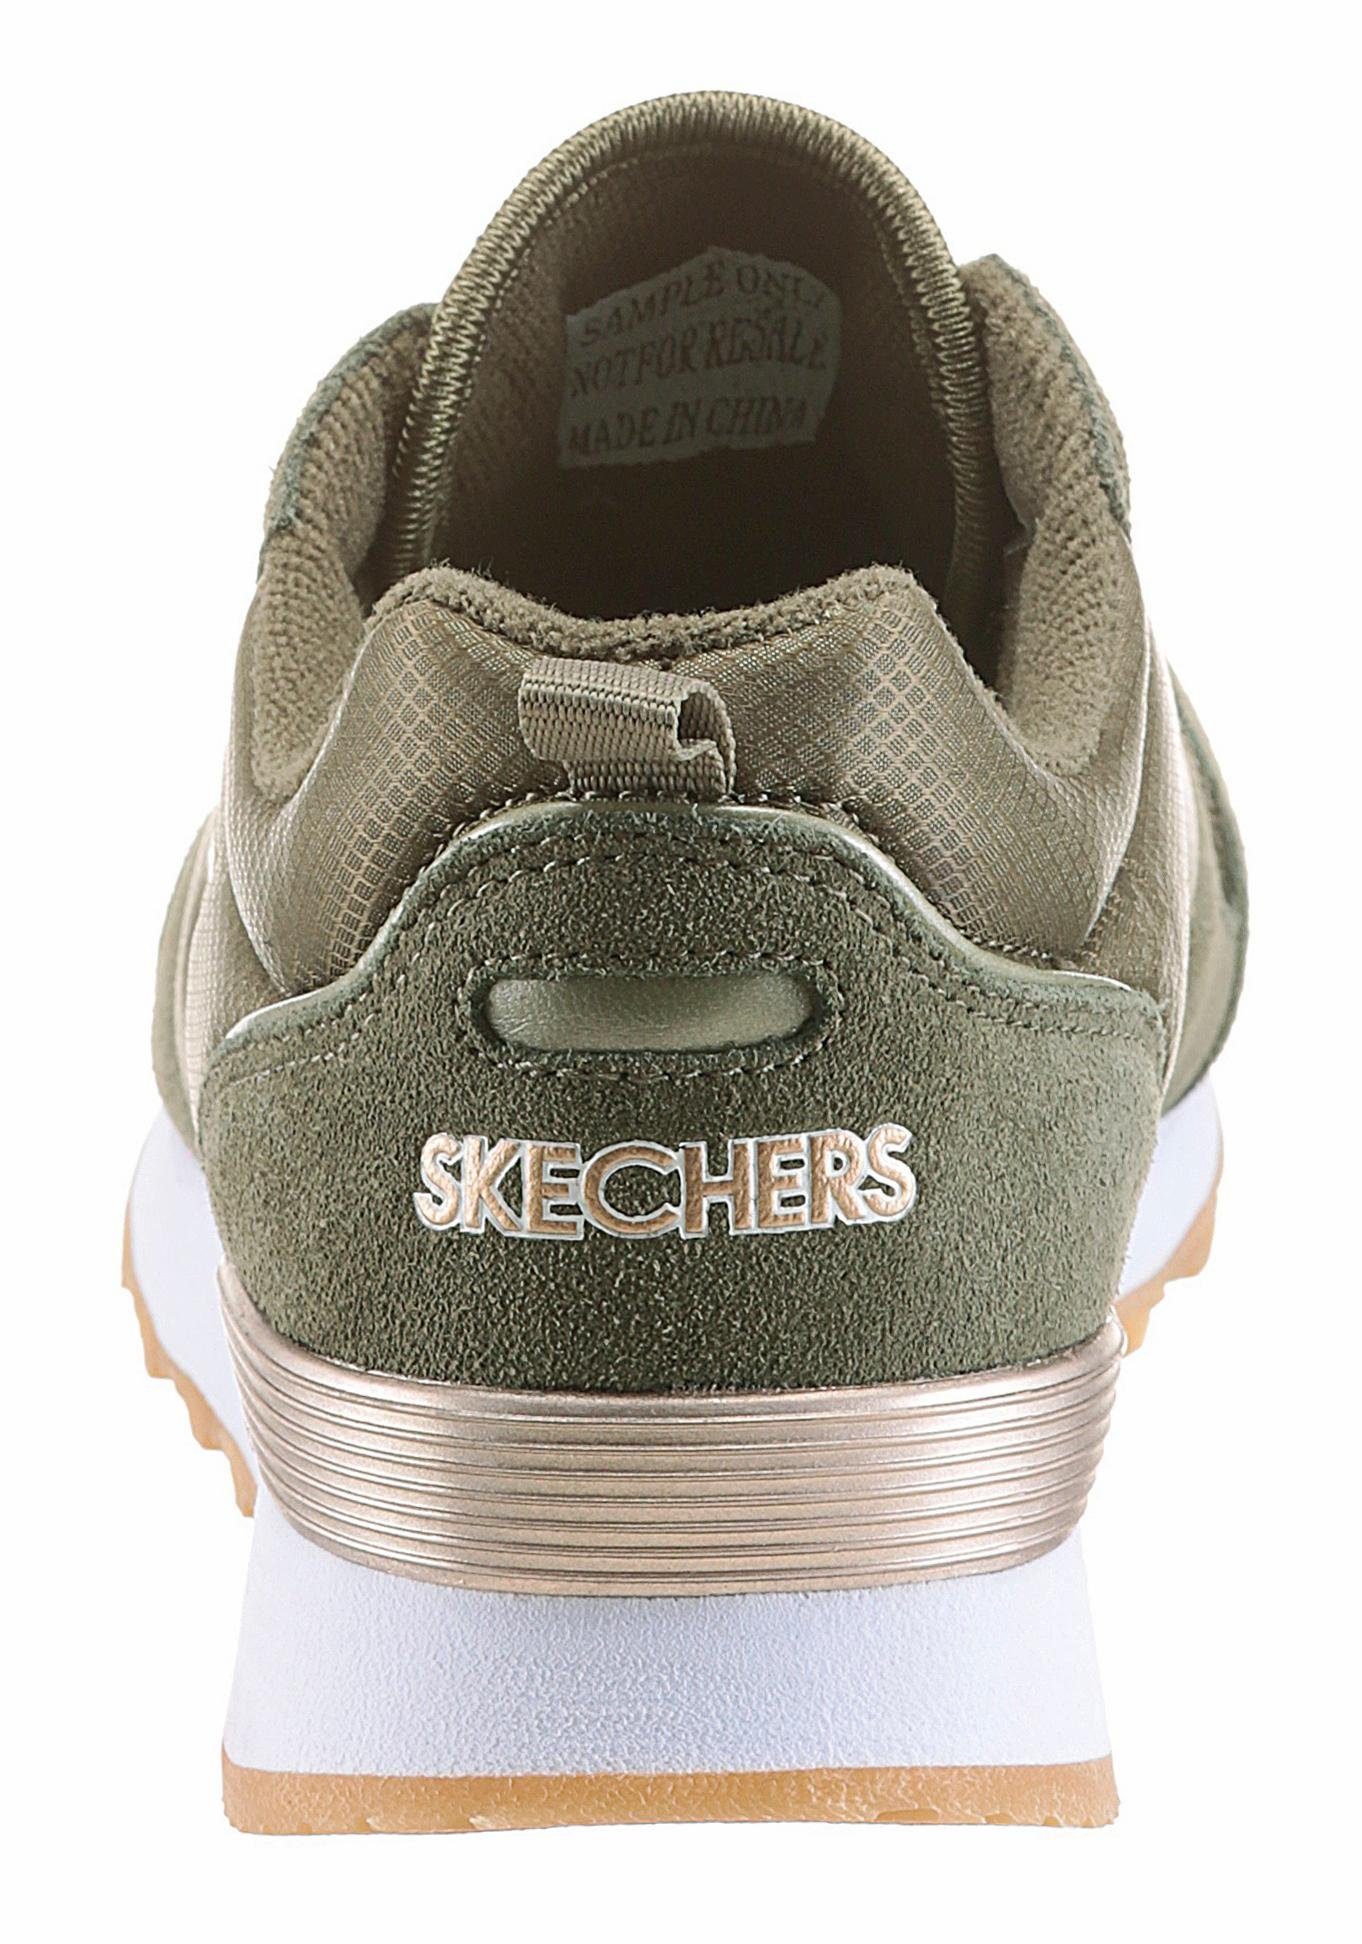 Skechers OG 85 - GOLDN mit Foam GURL Ausstattung Air-Cooled komfortabler Sneaker olivgrün Memory